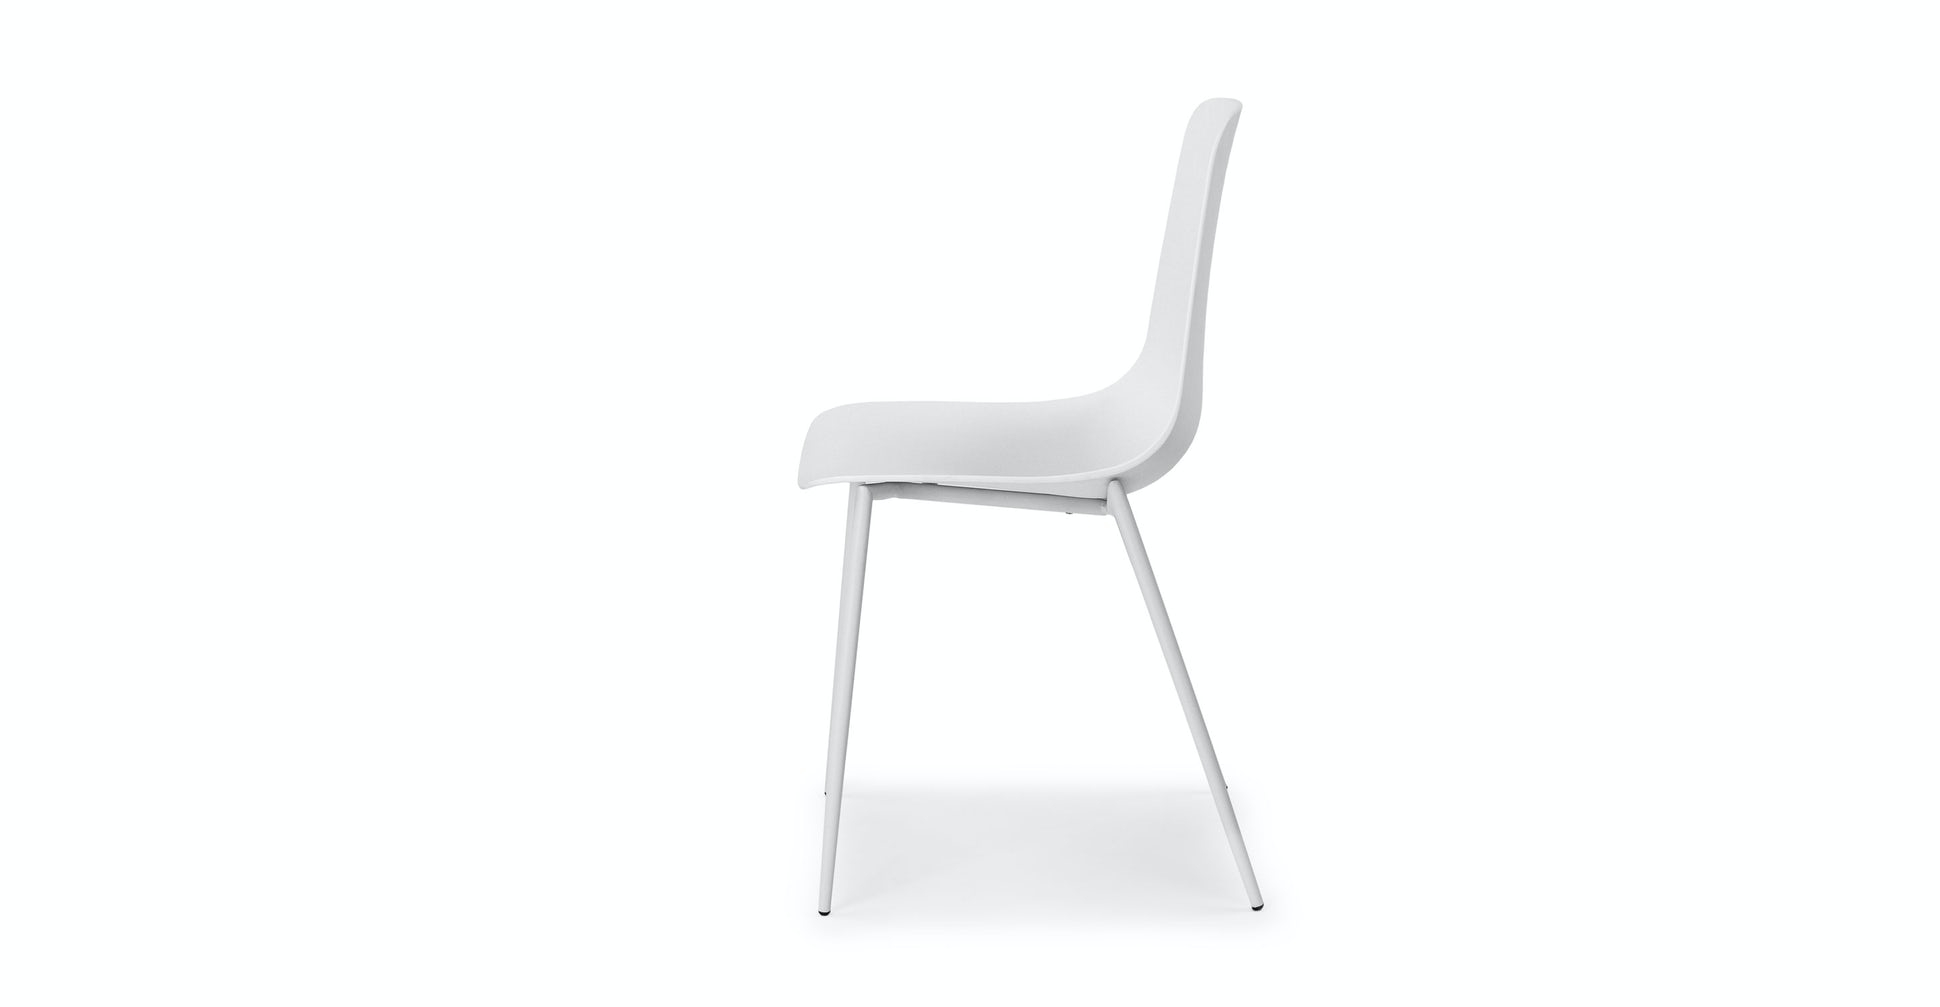 Svelti Pure White Dining Chair - Image 2